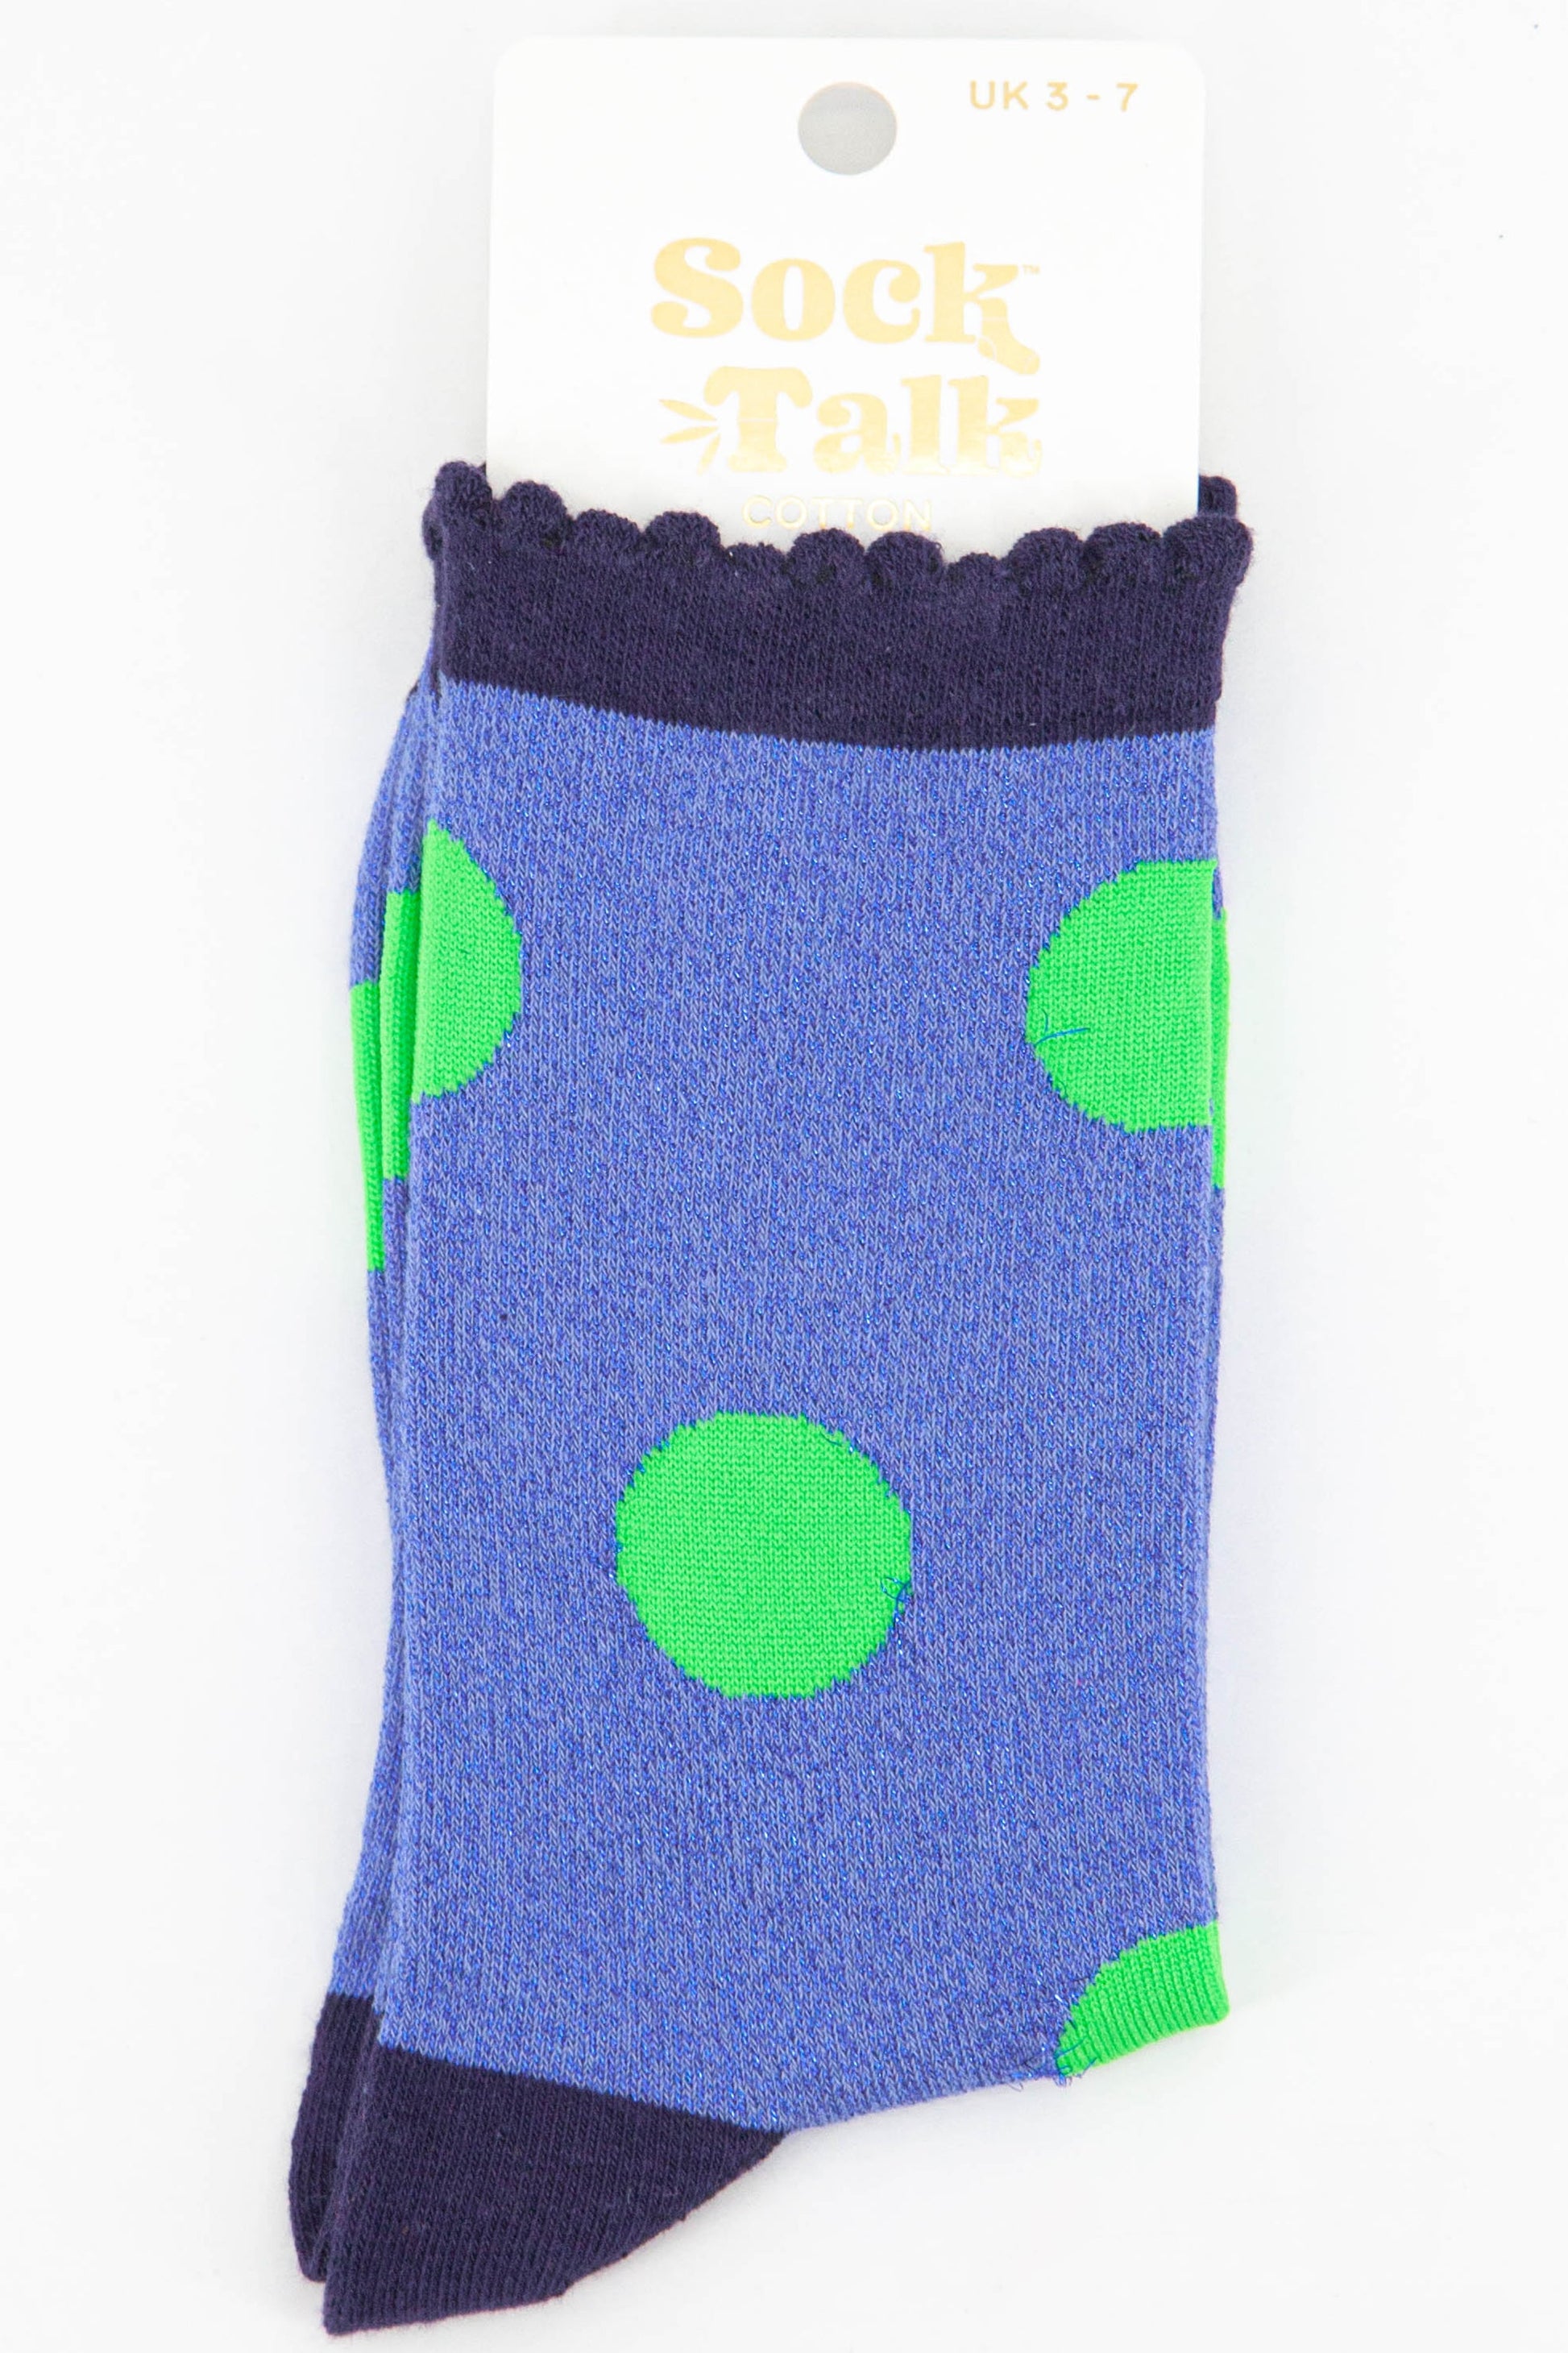 womens green polka dot glitter socks uk size 3-7